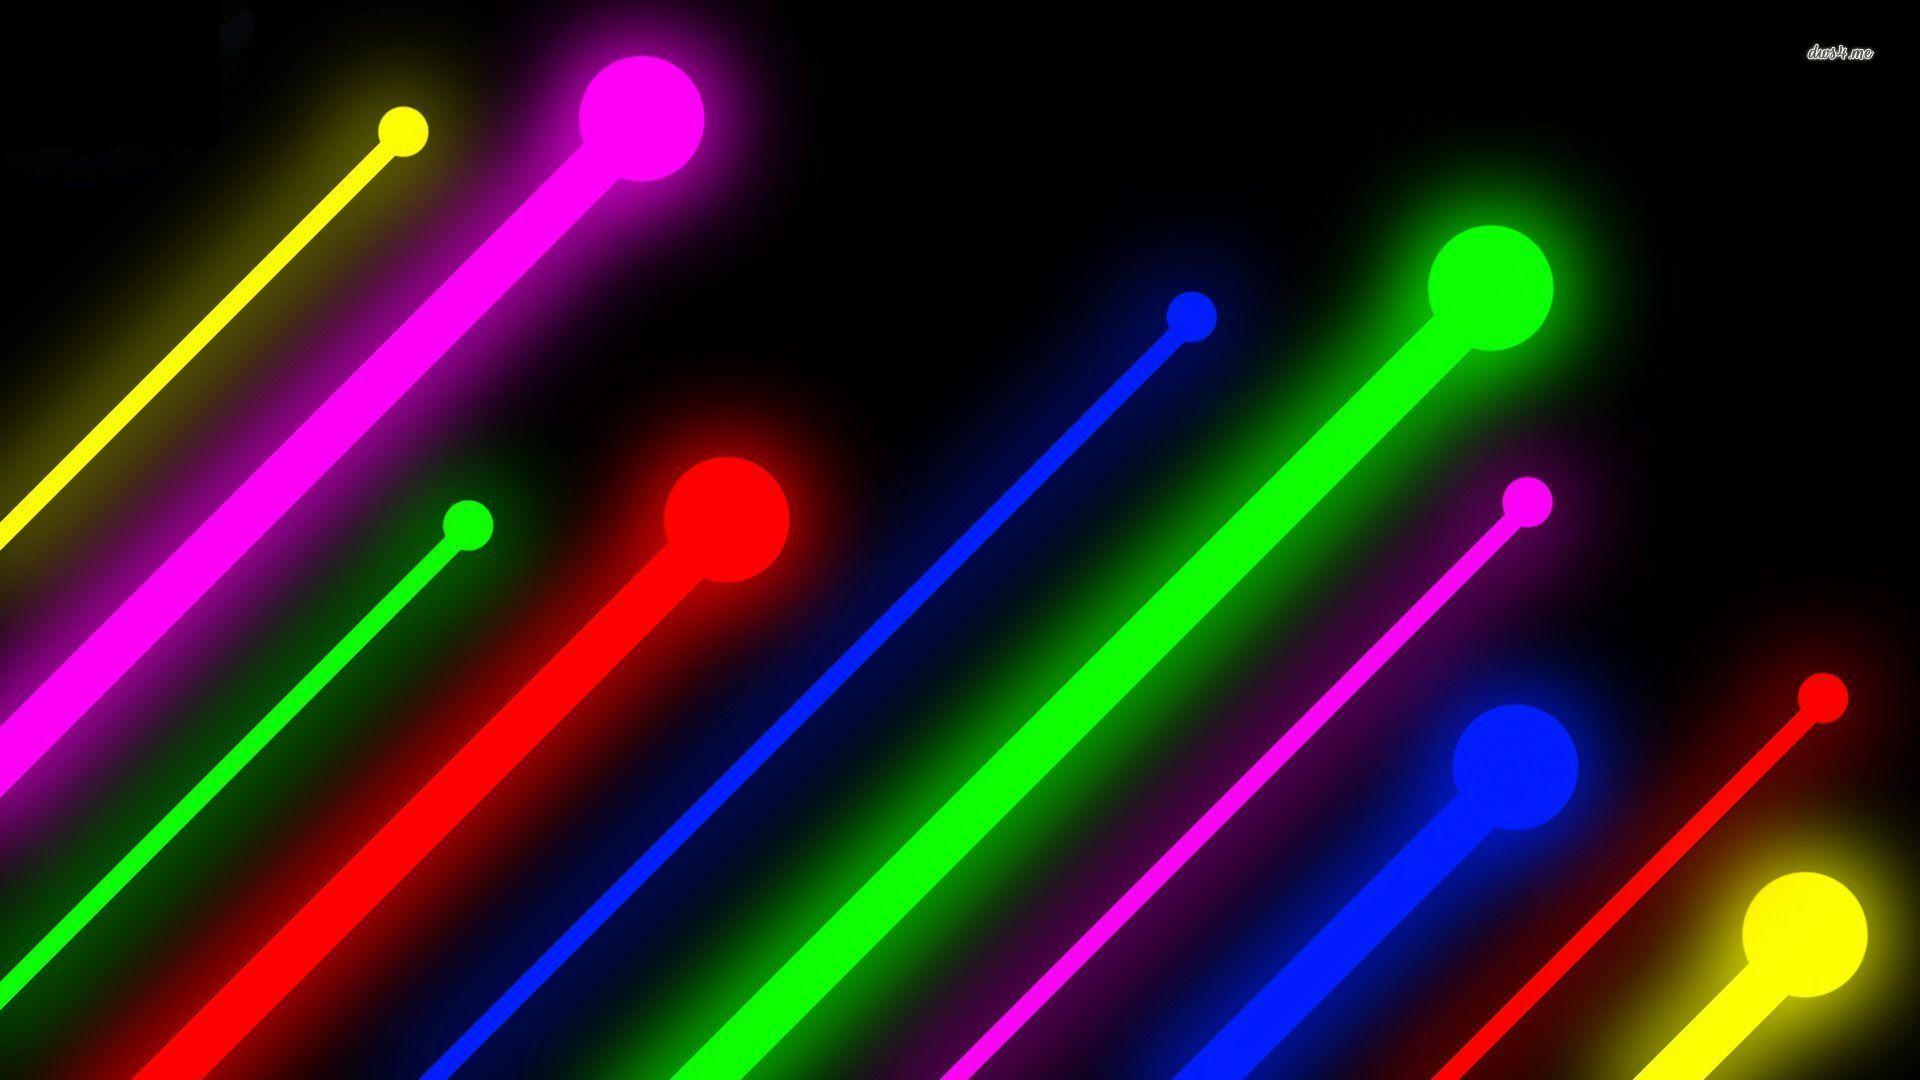 Neon Lights Wallpaper HD, 26.04 1920x1080 px